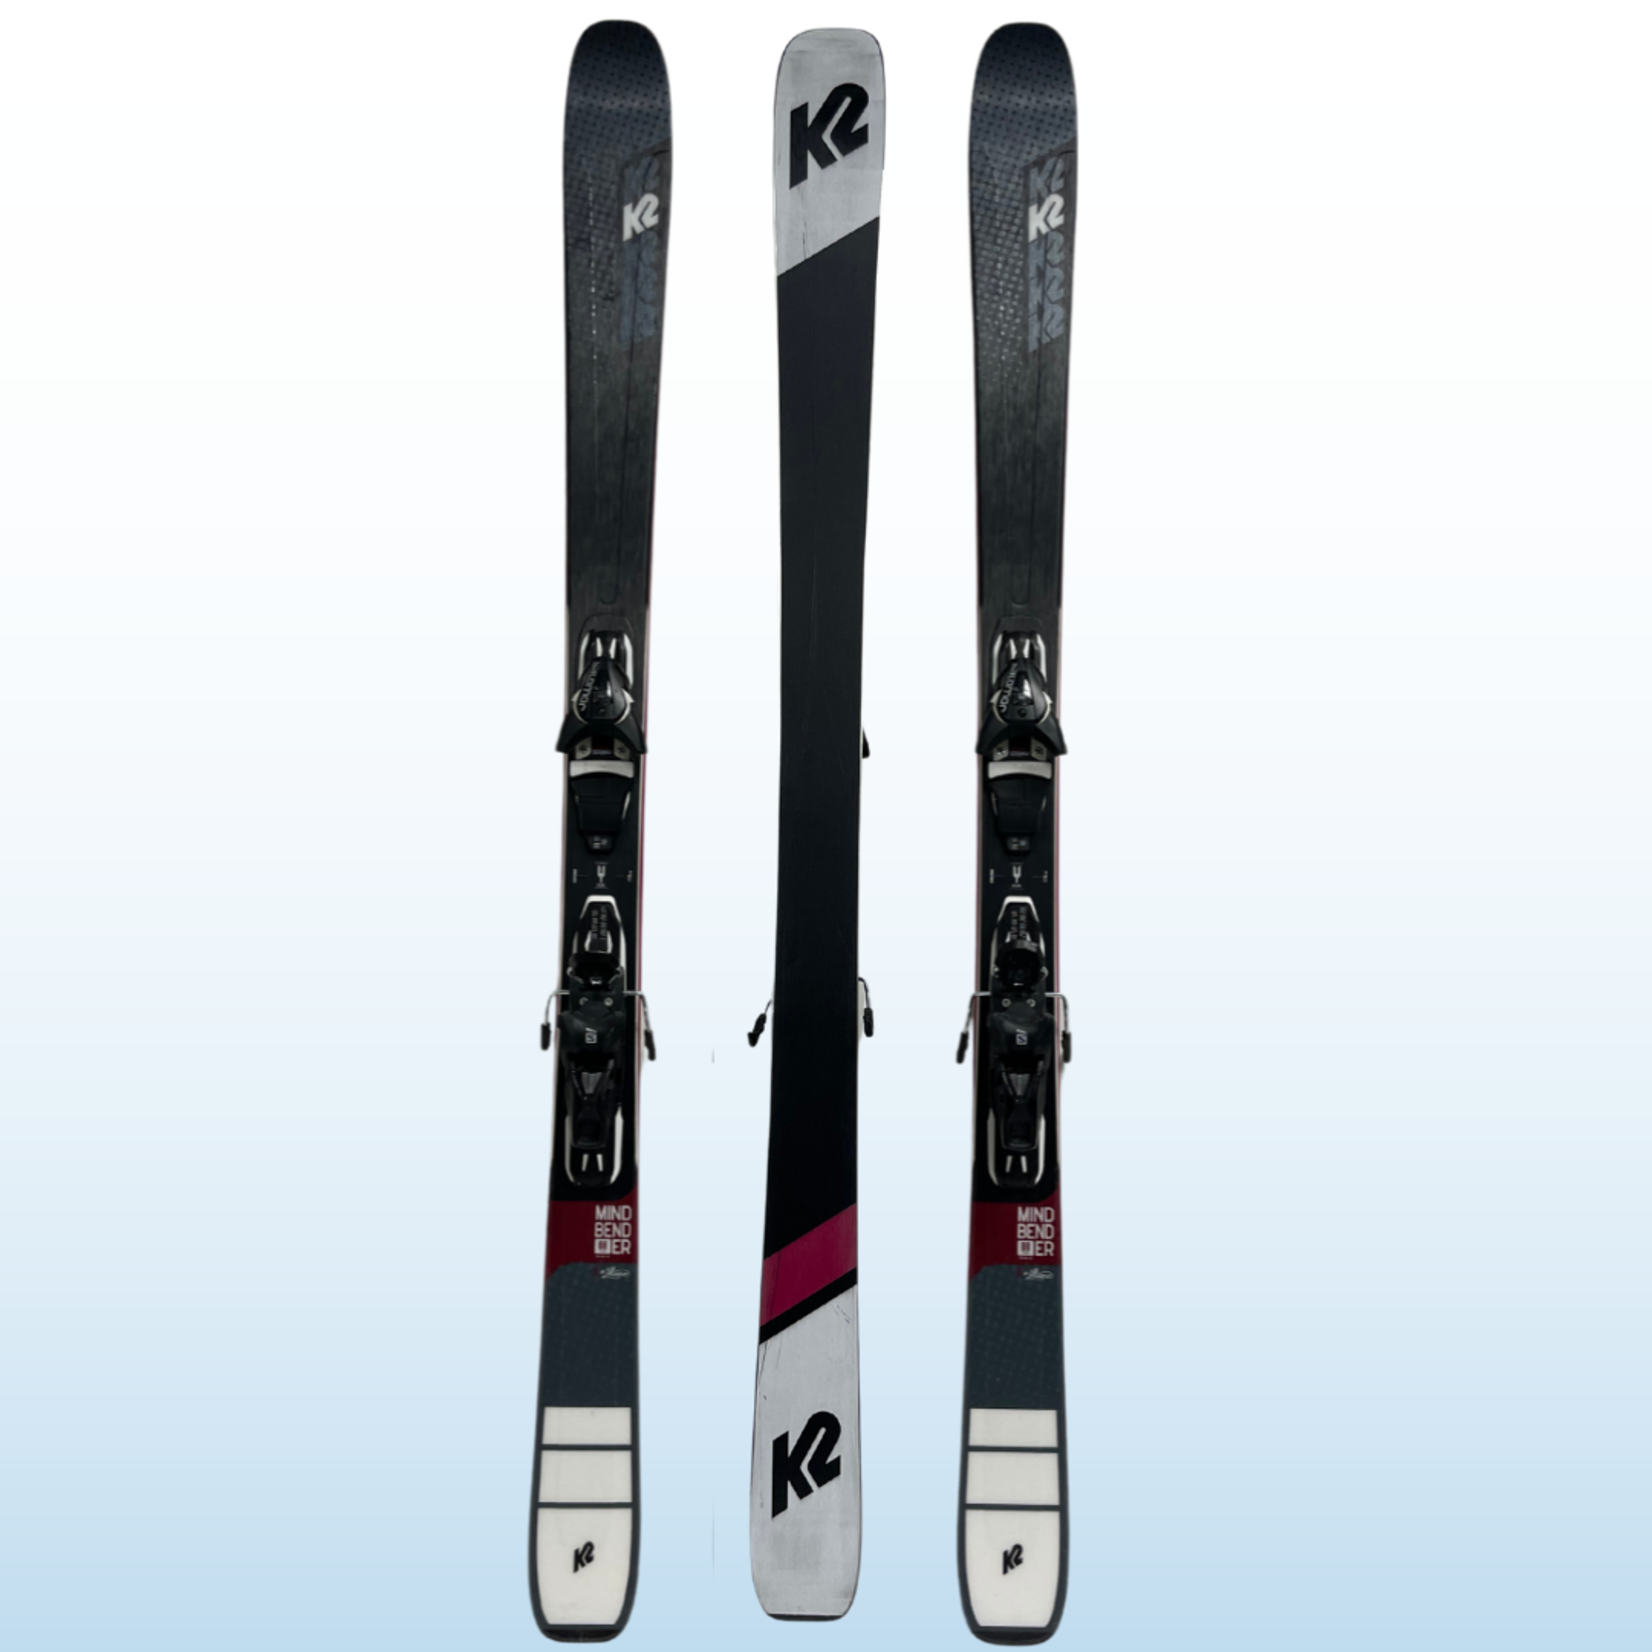 K2 K2 Mindbender 88w Skis, Size 149cm